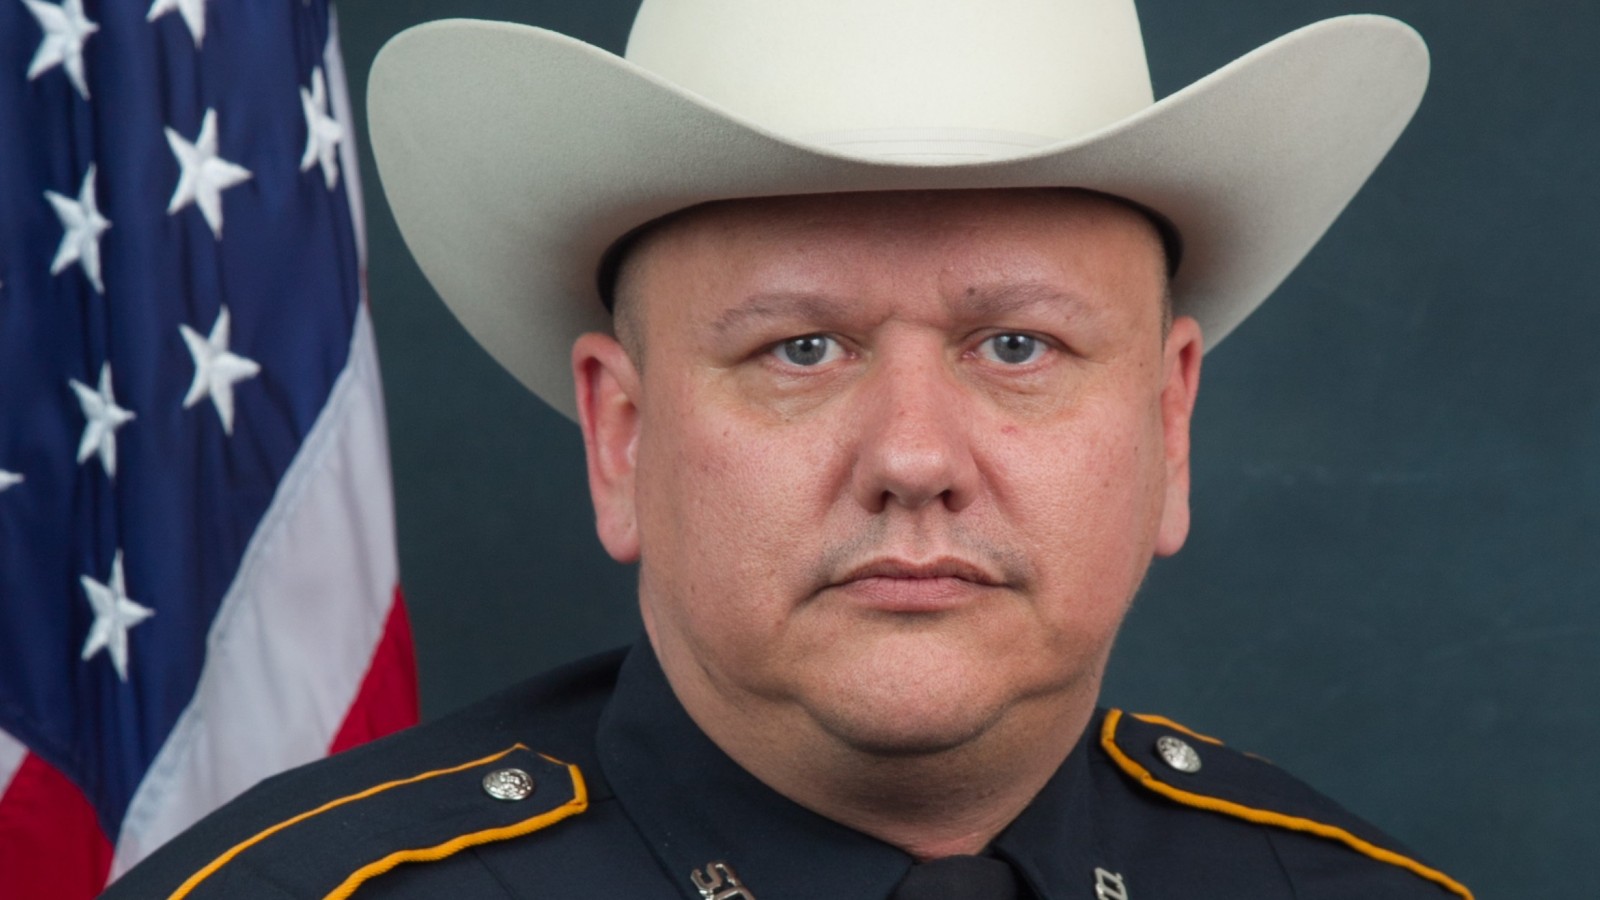 Sheriff's deputy shot while pumping gas at patrol car - CNN.com1600 x 900